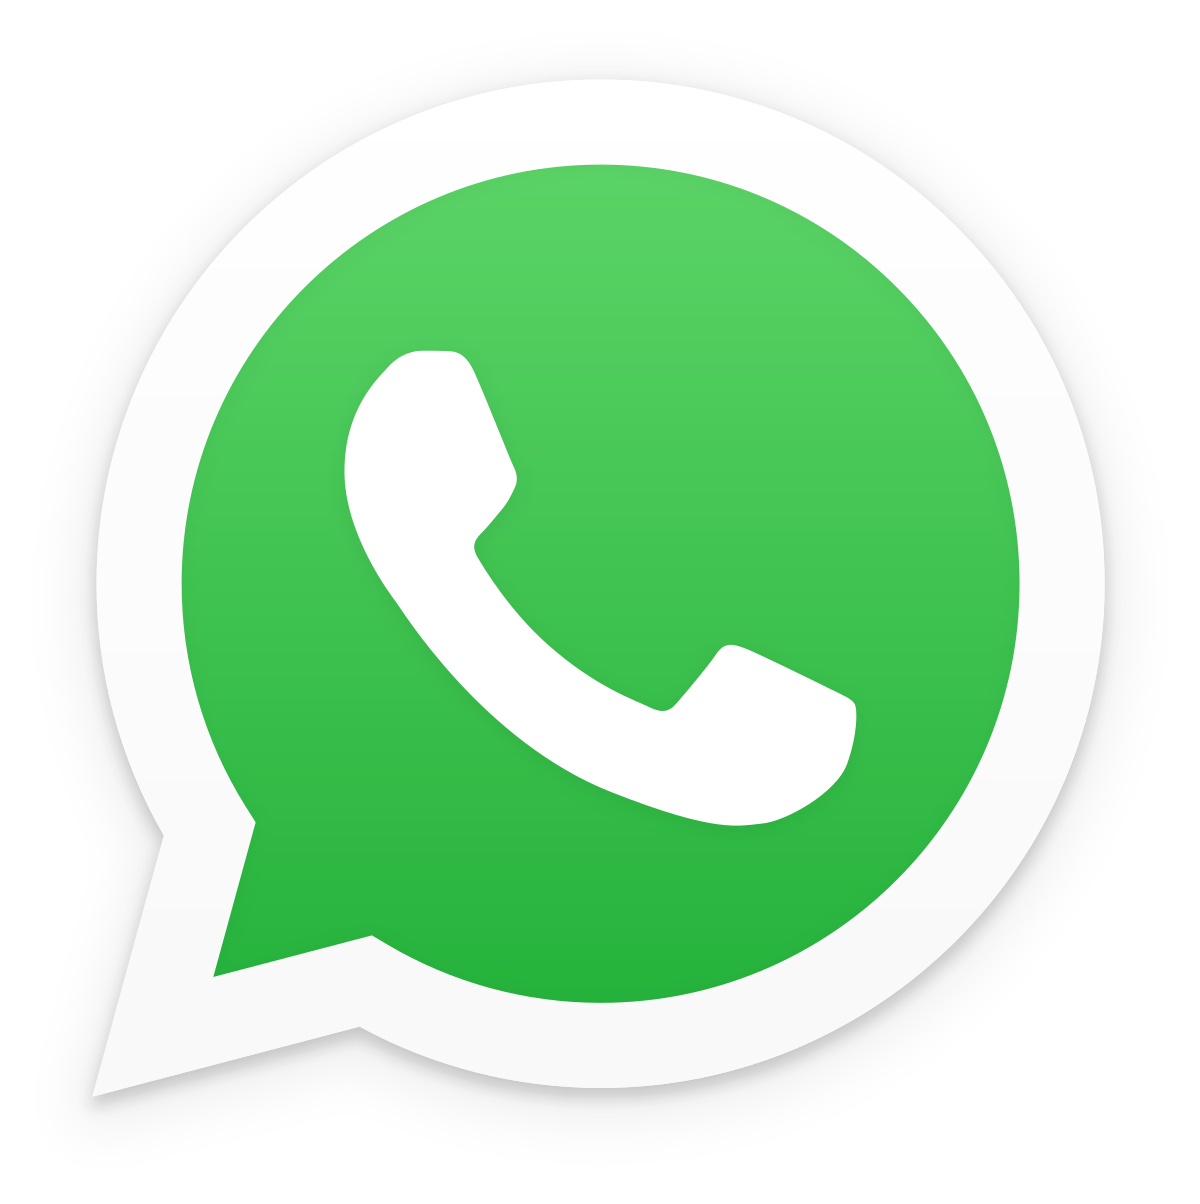 Avoiding the minefield of WhatsApp communications